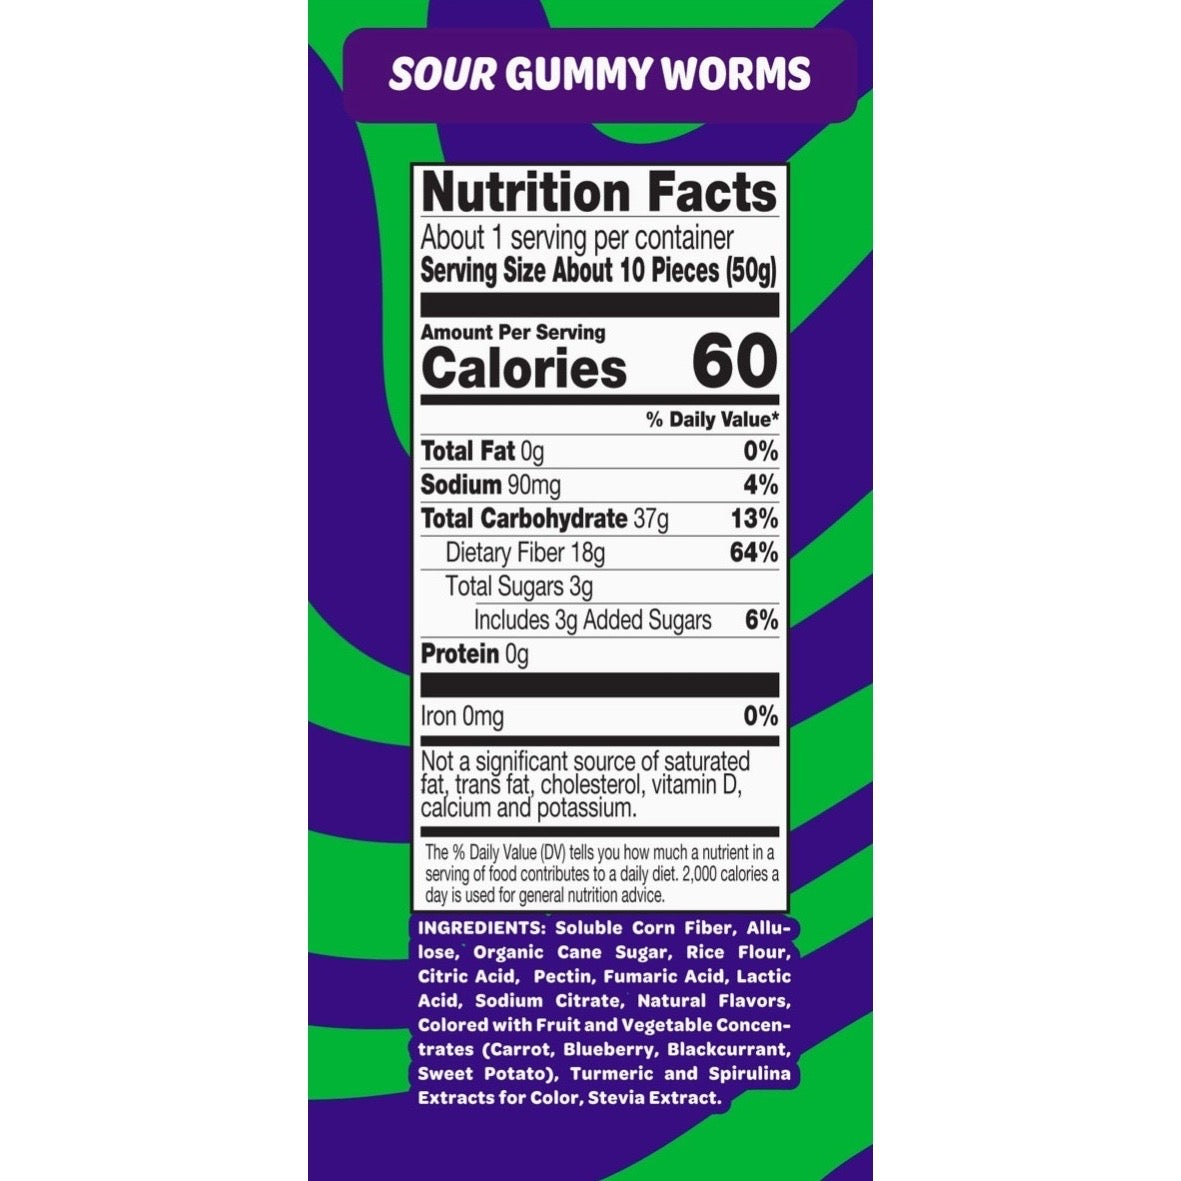 Joyride sour gummy worms